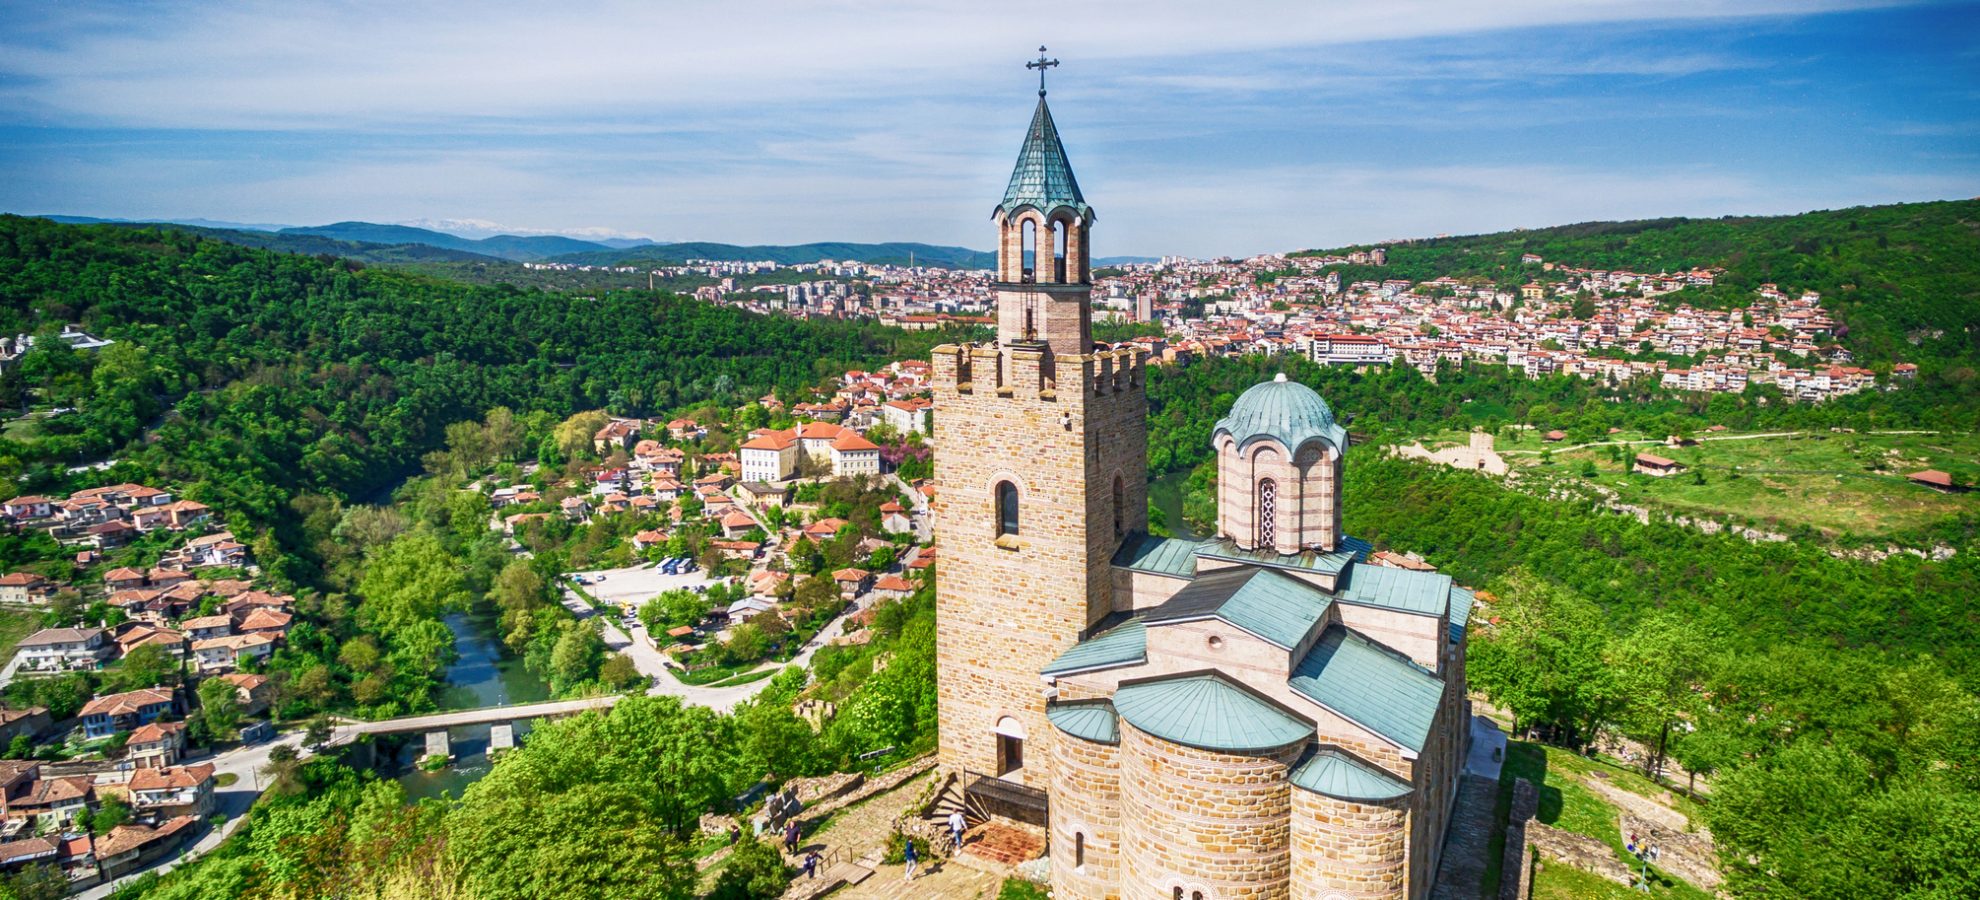 Bulgarije - de oude stad Veliko Tarnovo